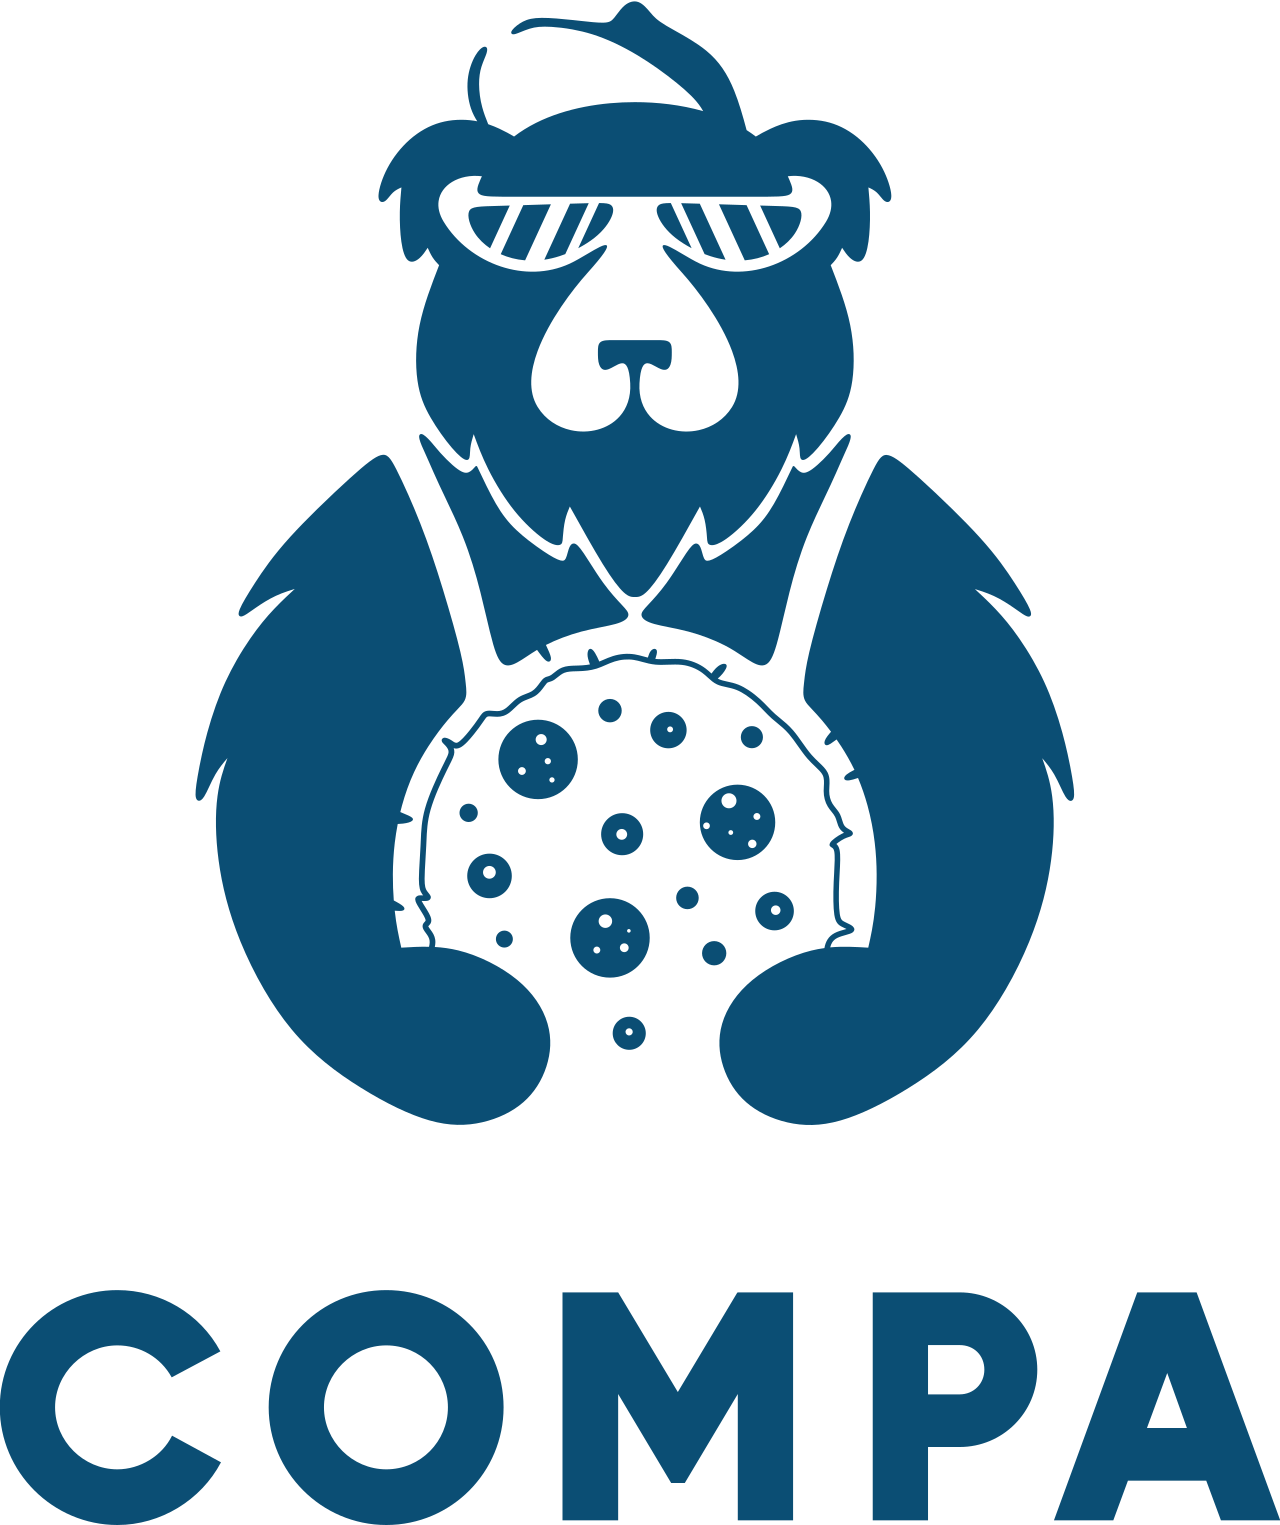 COMPA's logo